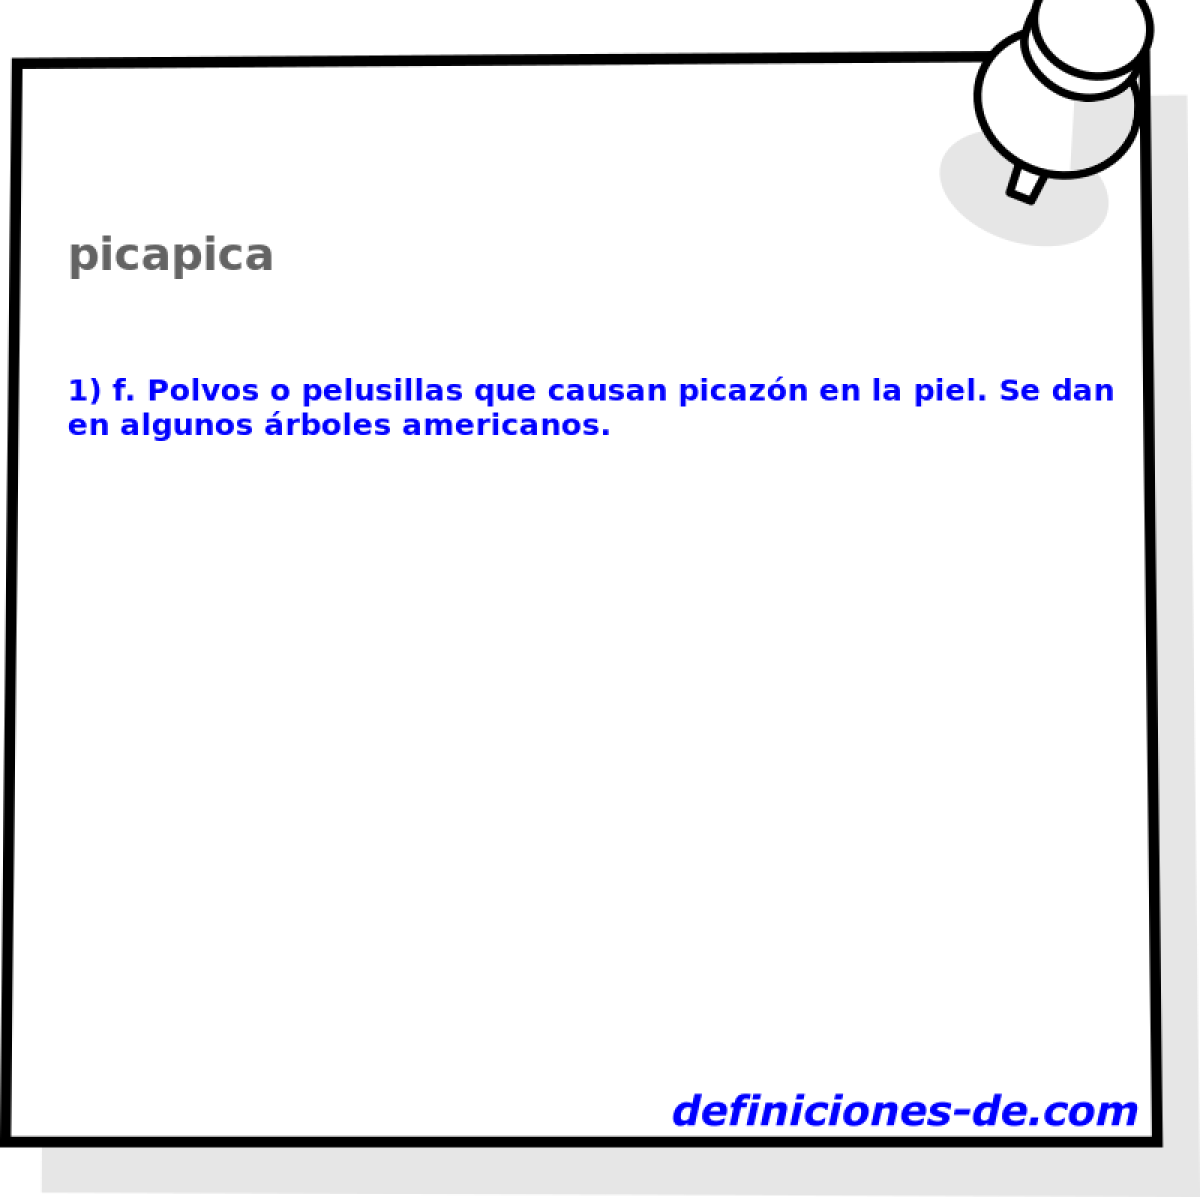 picapica 